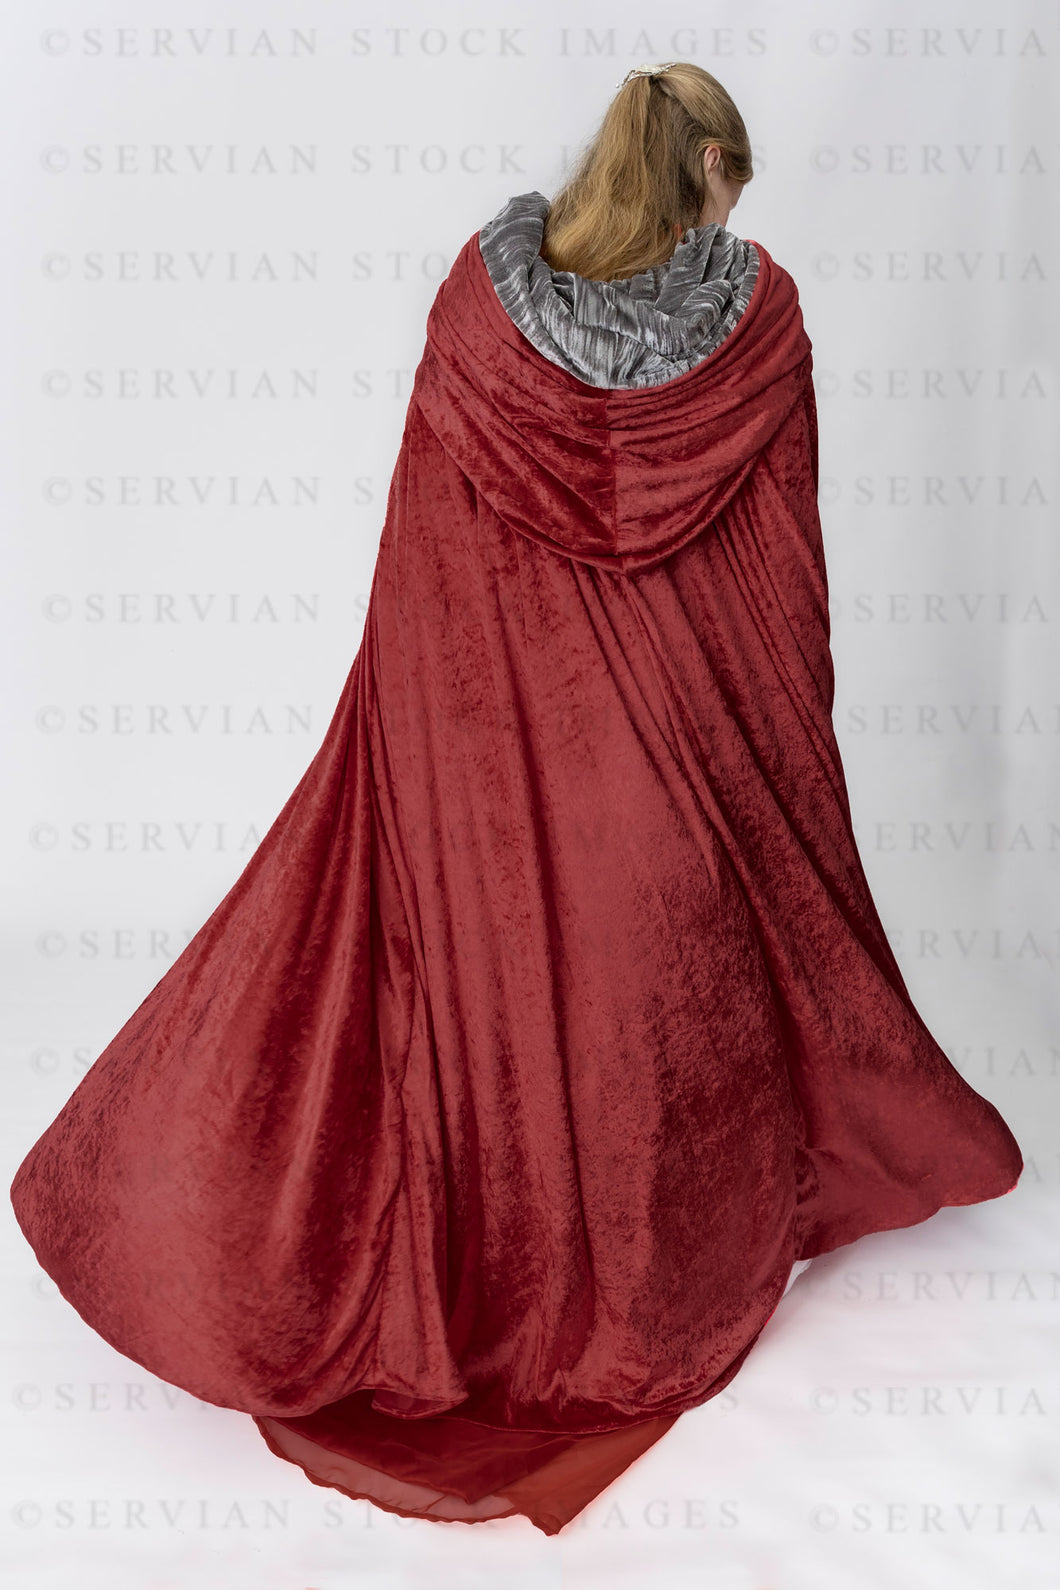 Medieval or High fantasy woman in a long red velvet cloak (Katherine5084)